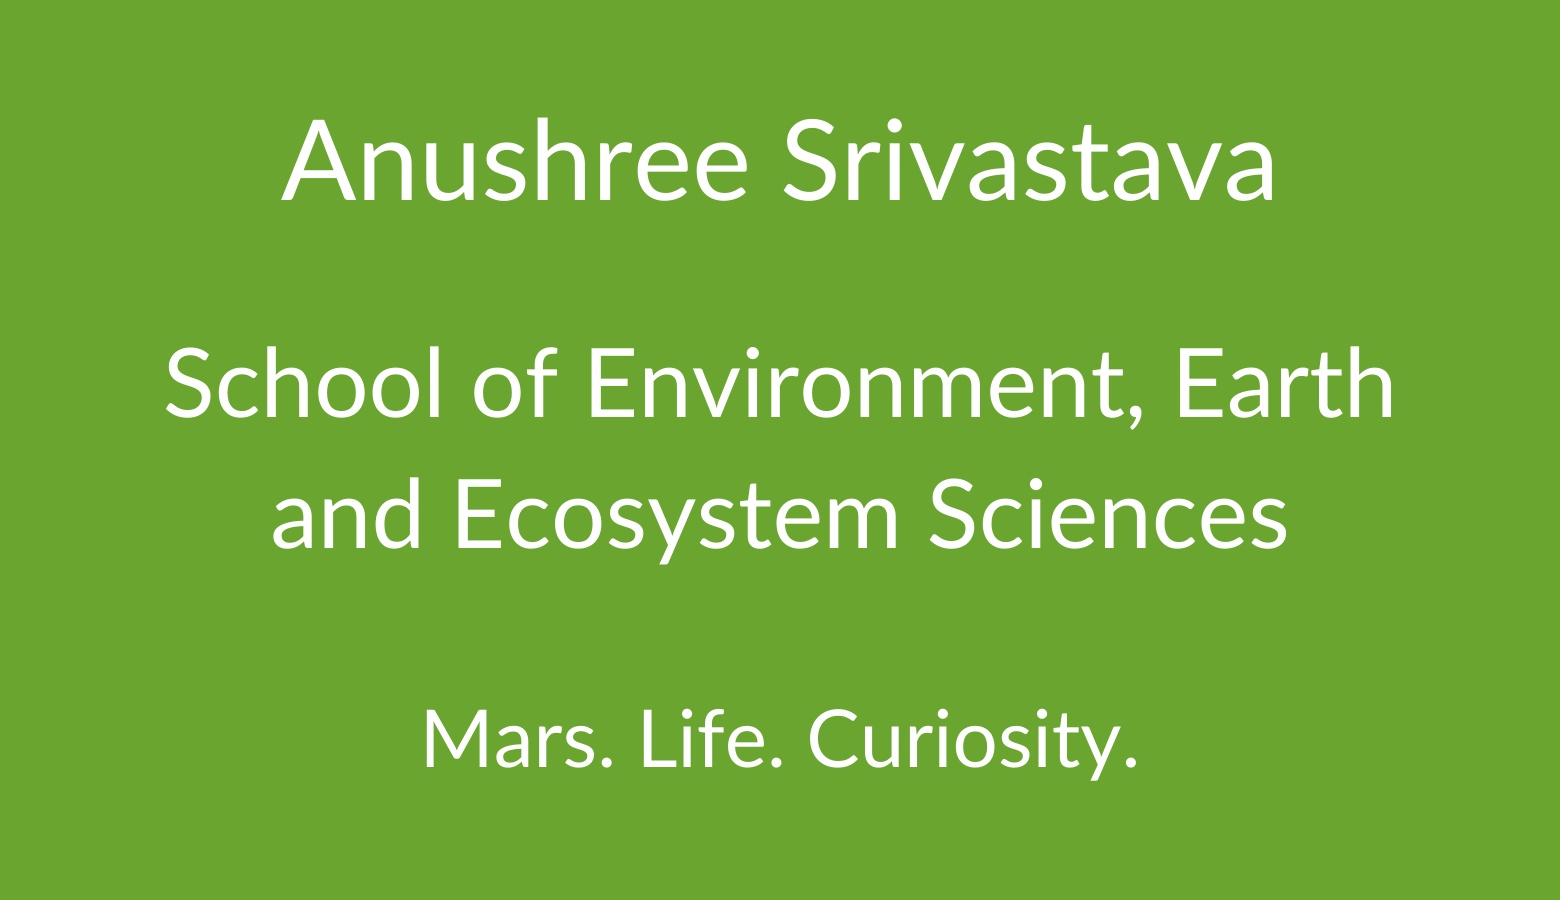 Anushree Srivastava. School of Environment, Earth and Ecosystem Sciences. Mars. Life. Curiosity.